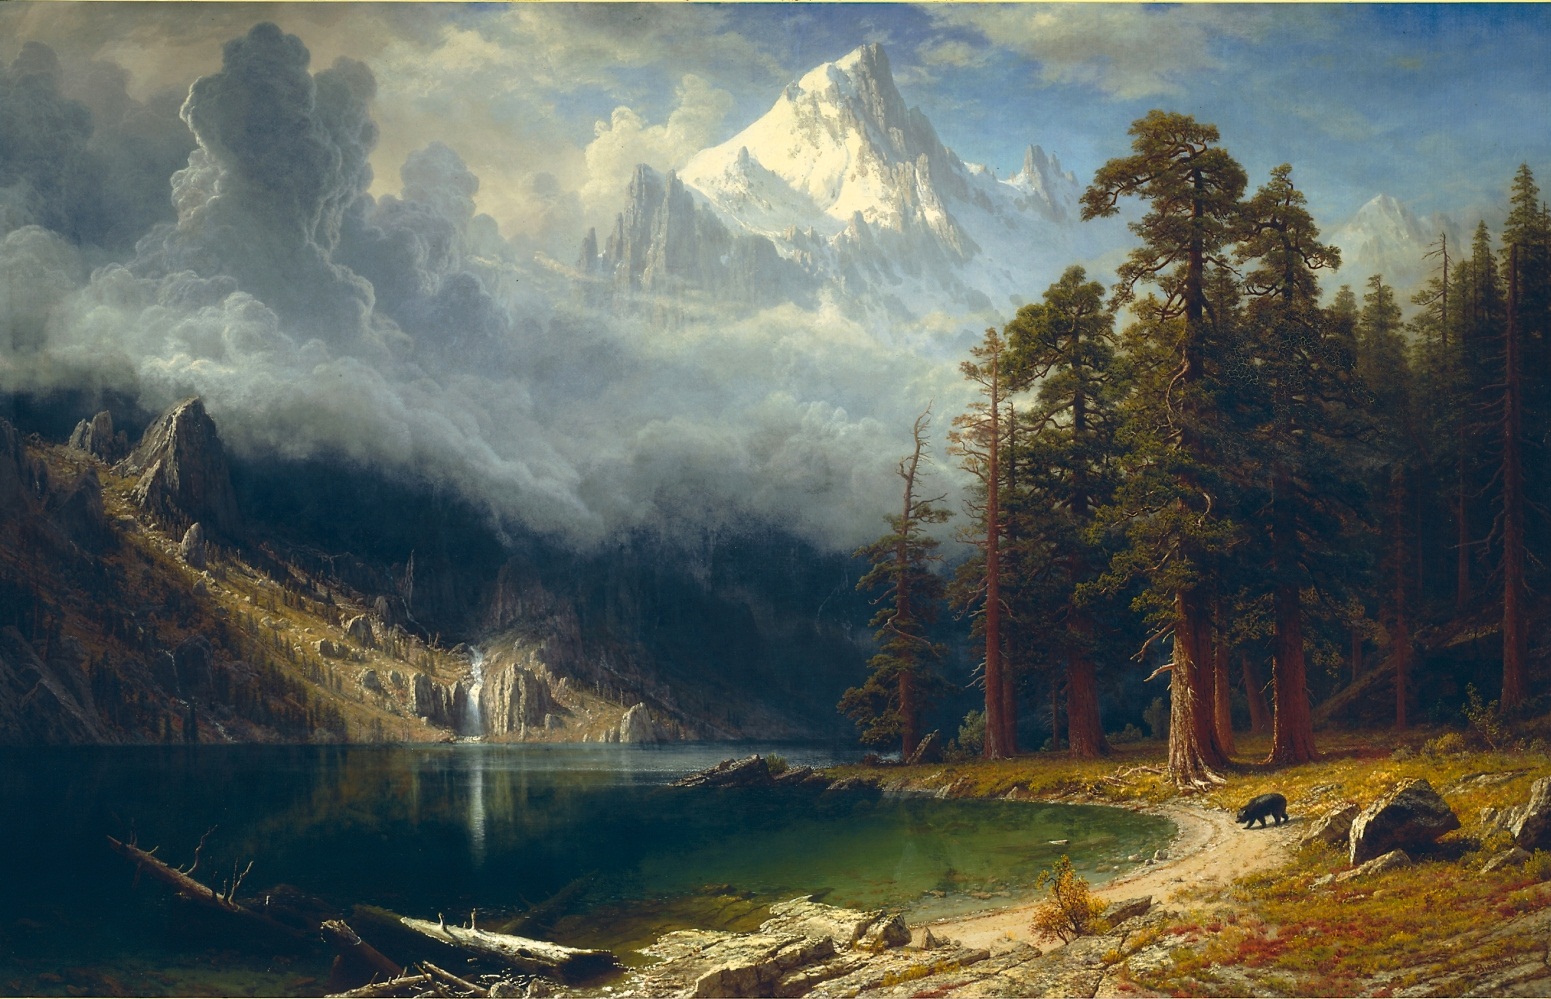 Albert Bierstadt - January 7, 1830 - February 18, 1902